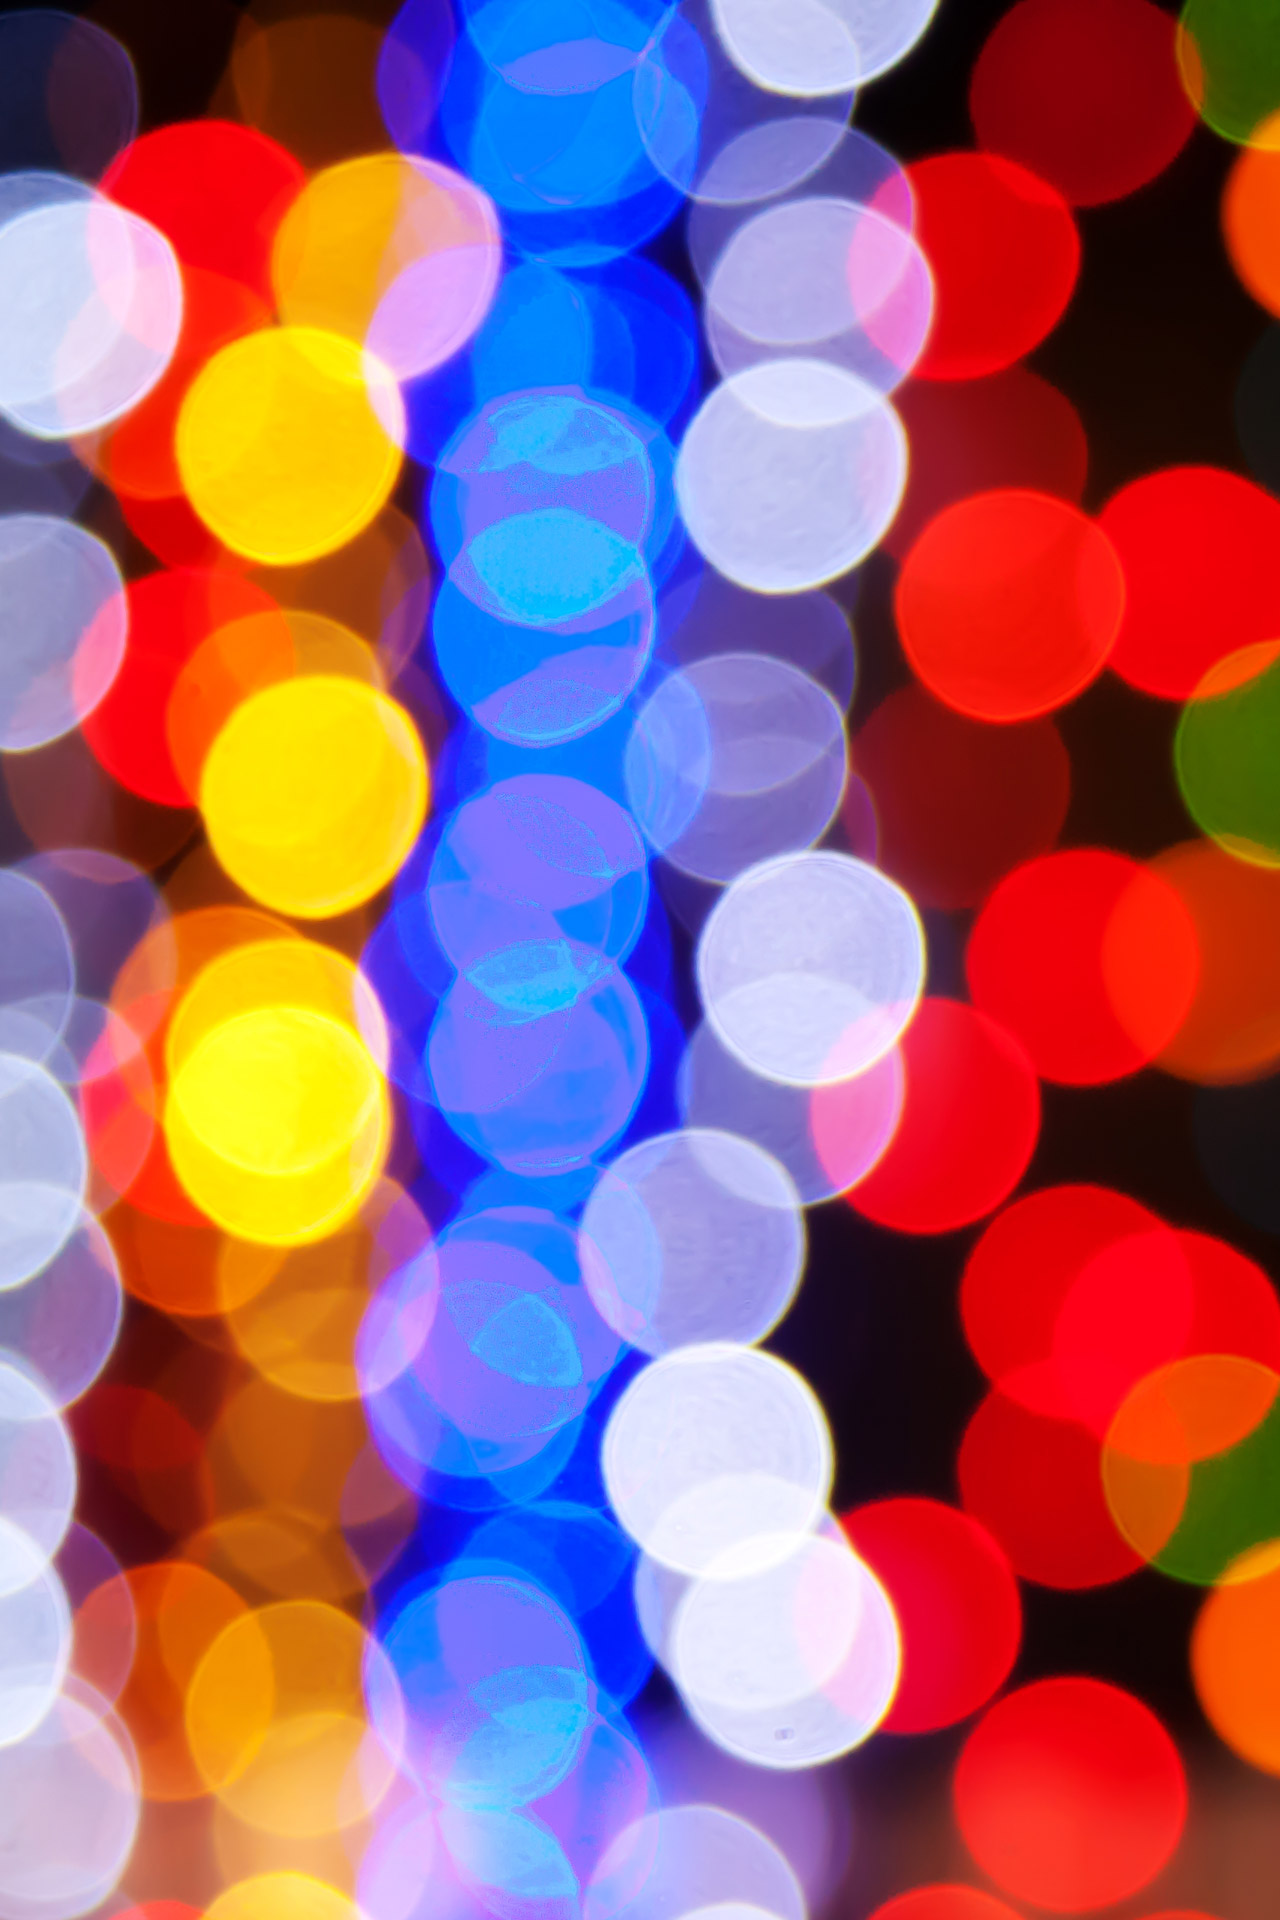 blurred colorful Christmas lights